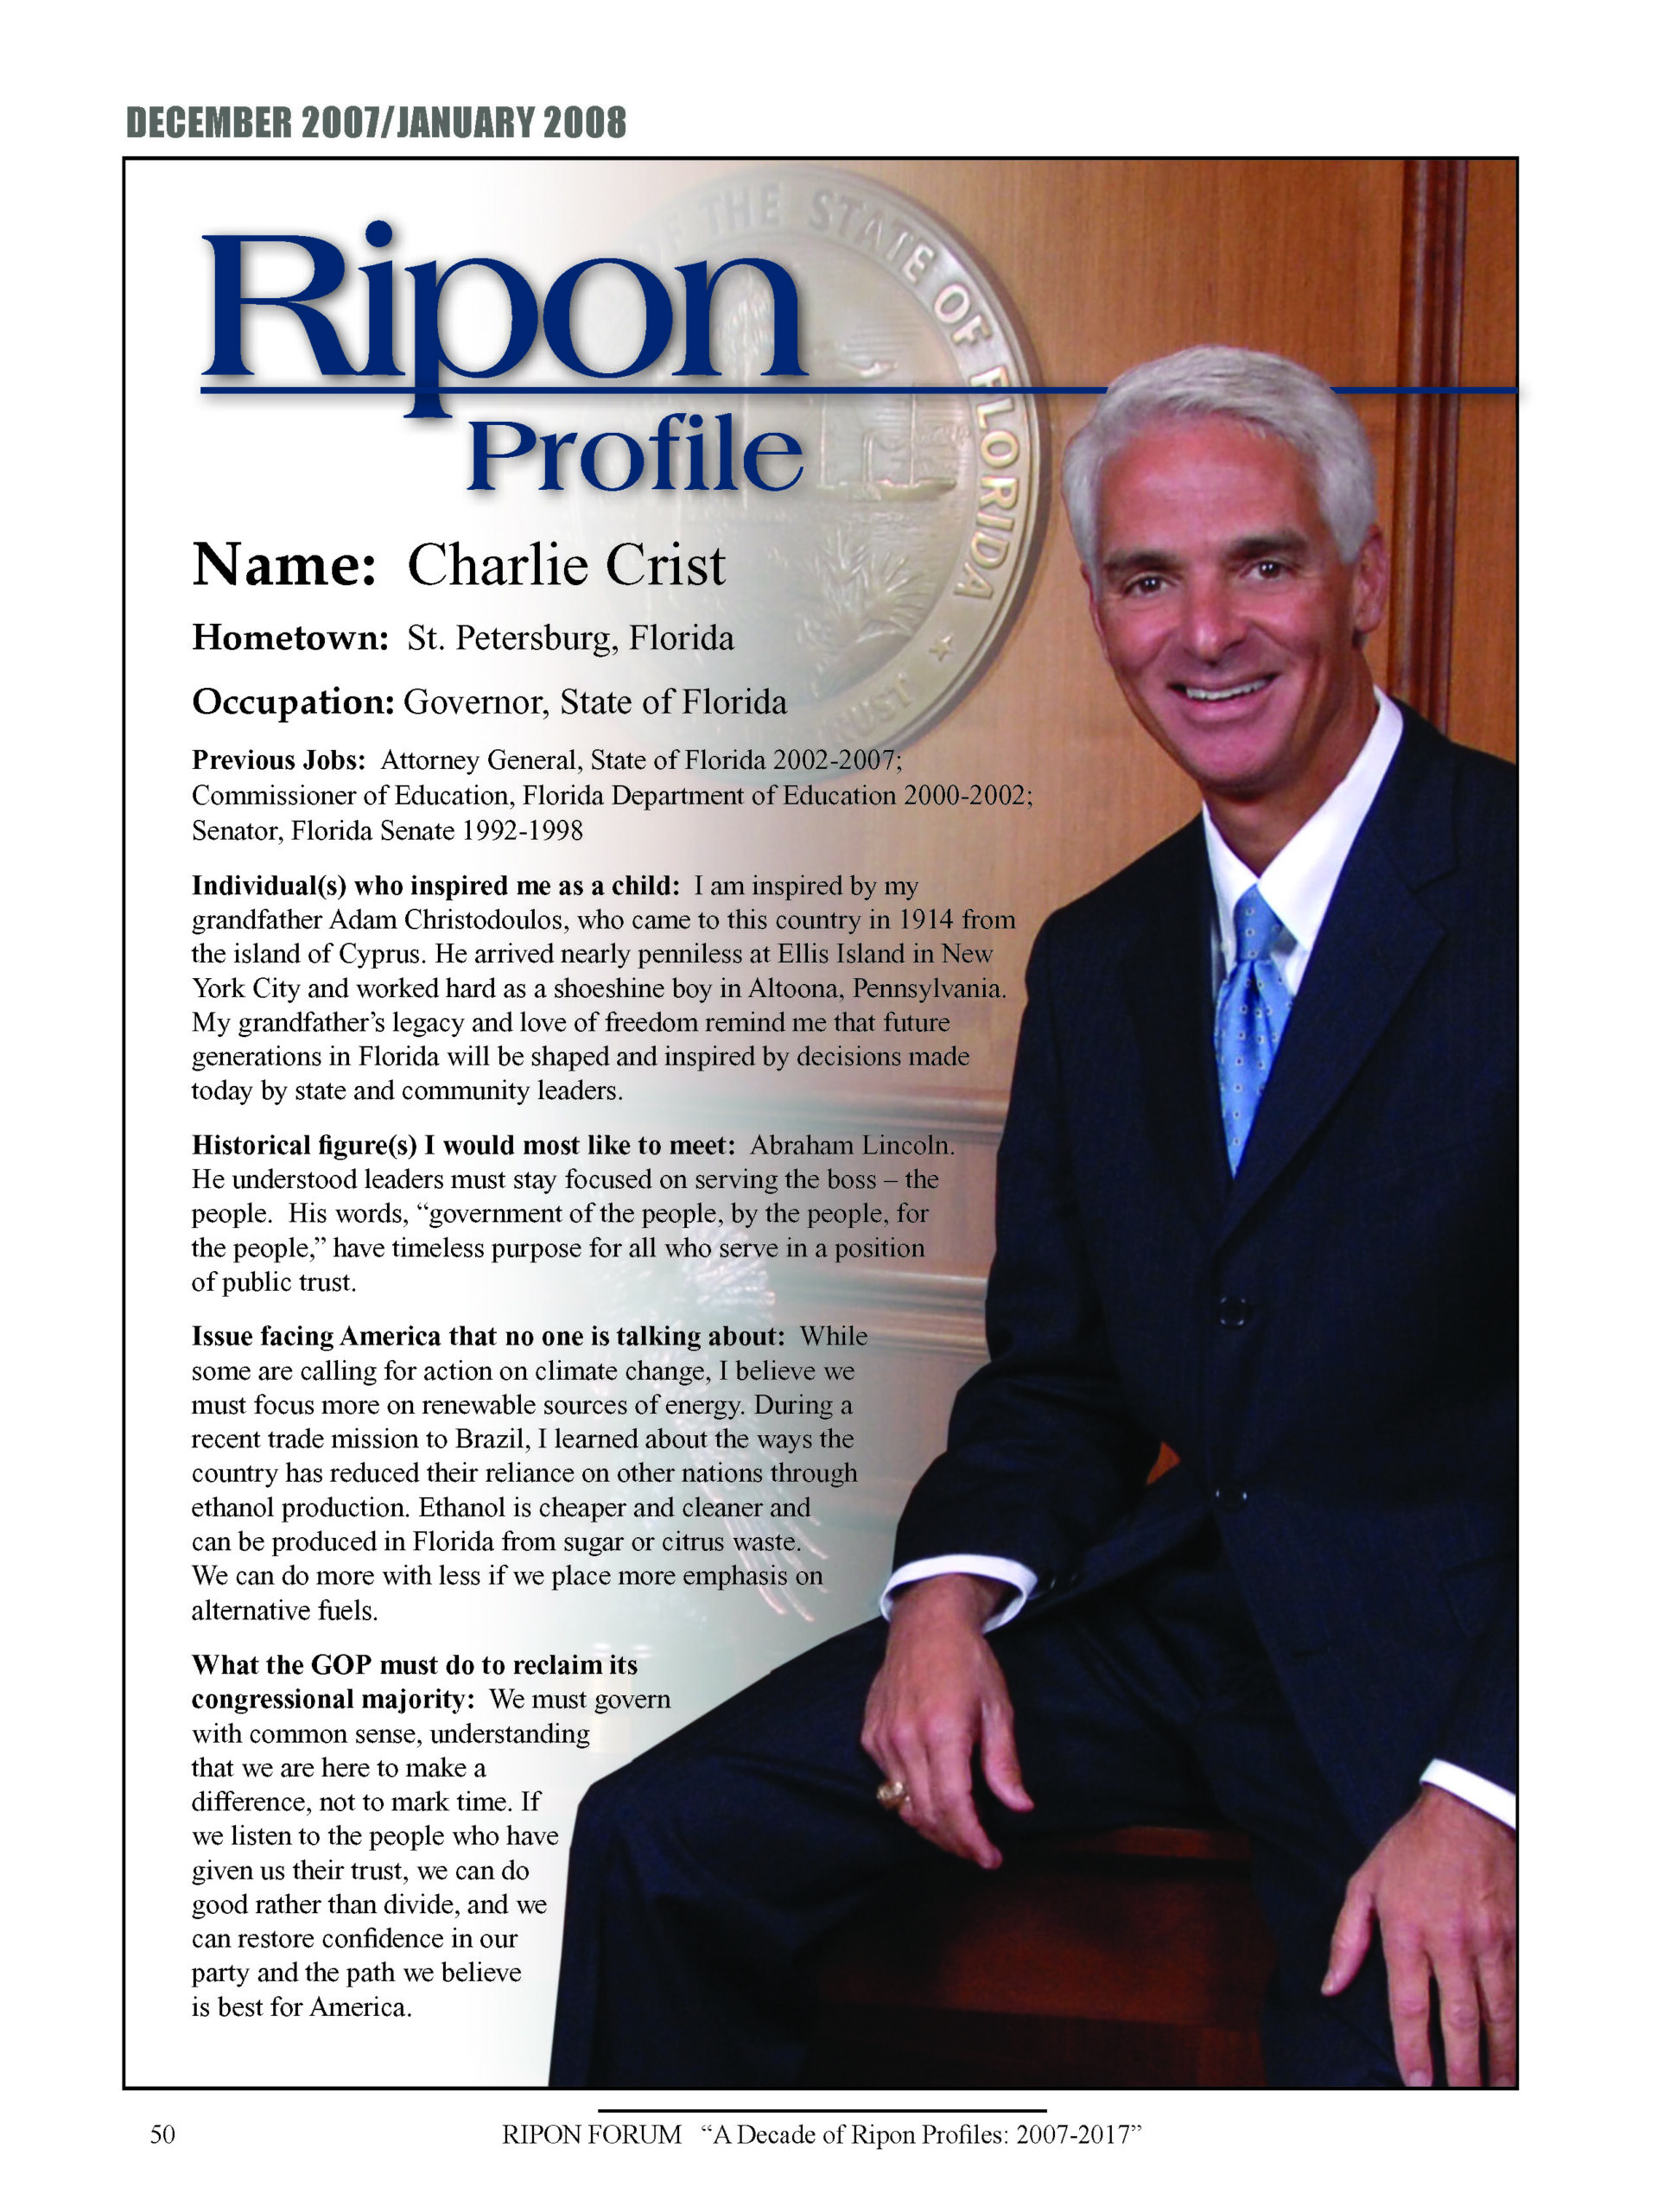 Ripon Profile of Charlie Crist